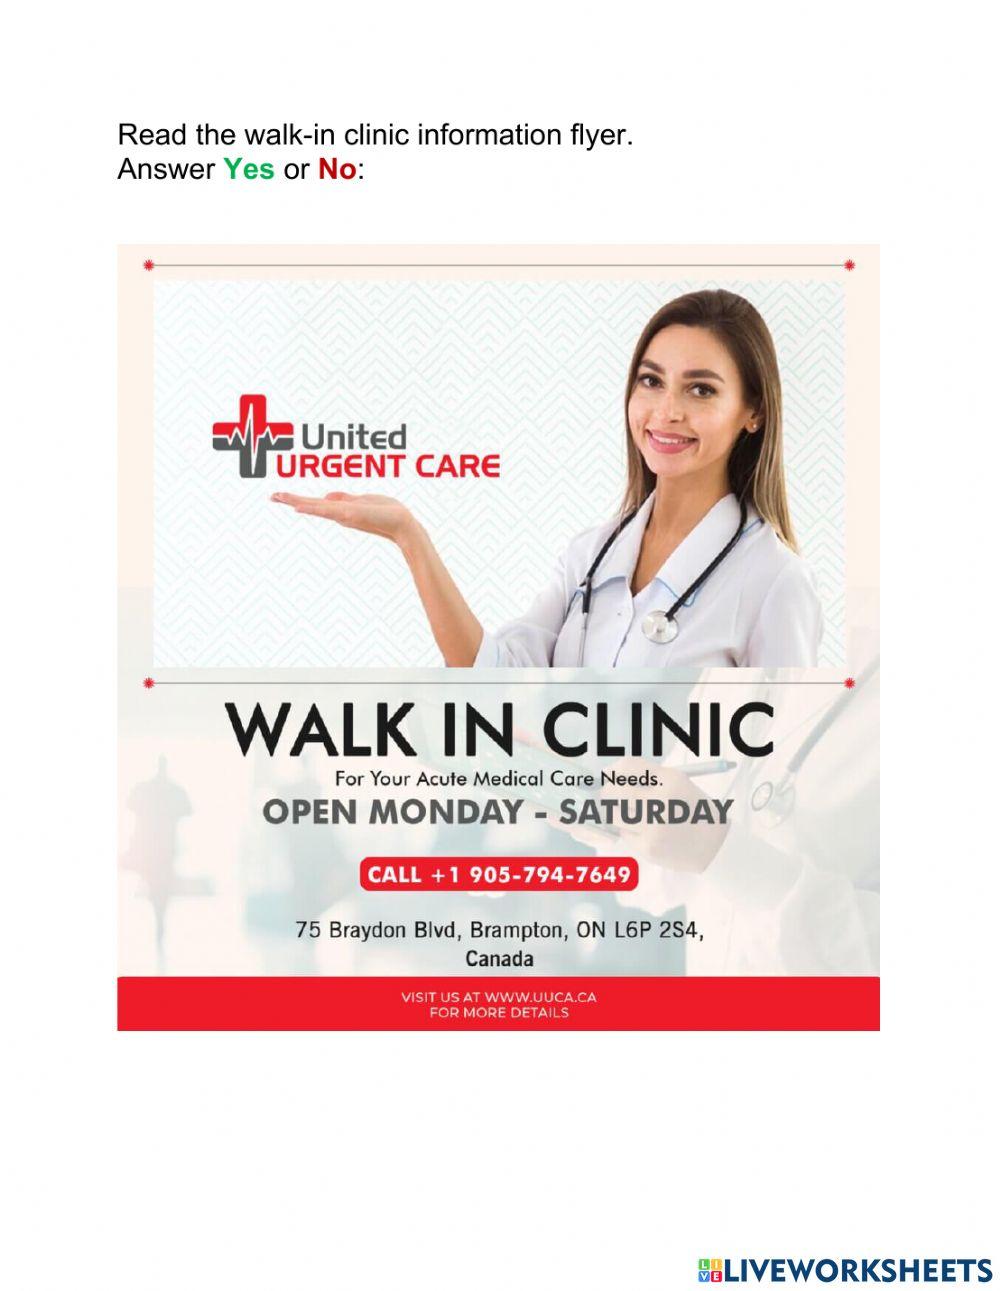 Walk-in Clinic Information Flyer Ex.3